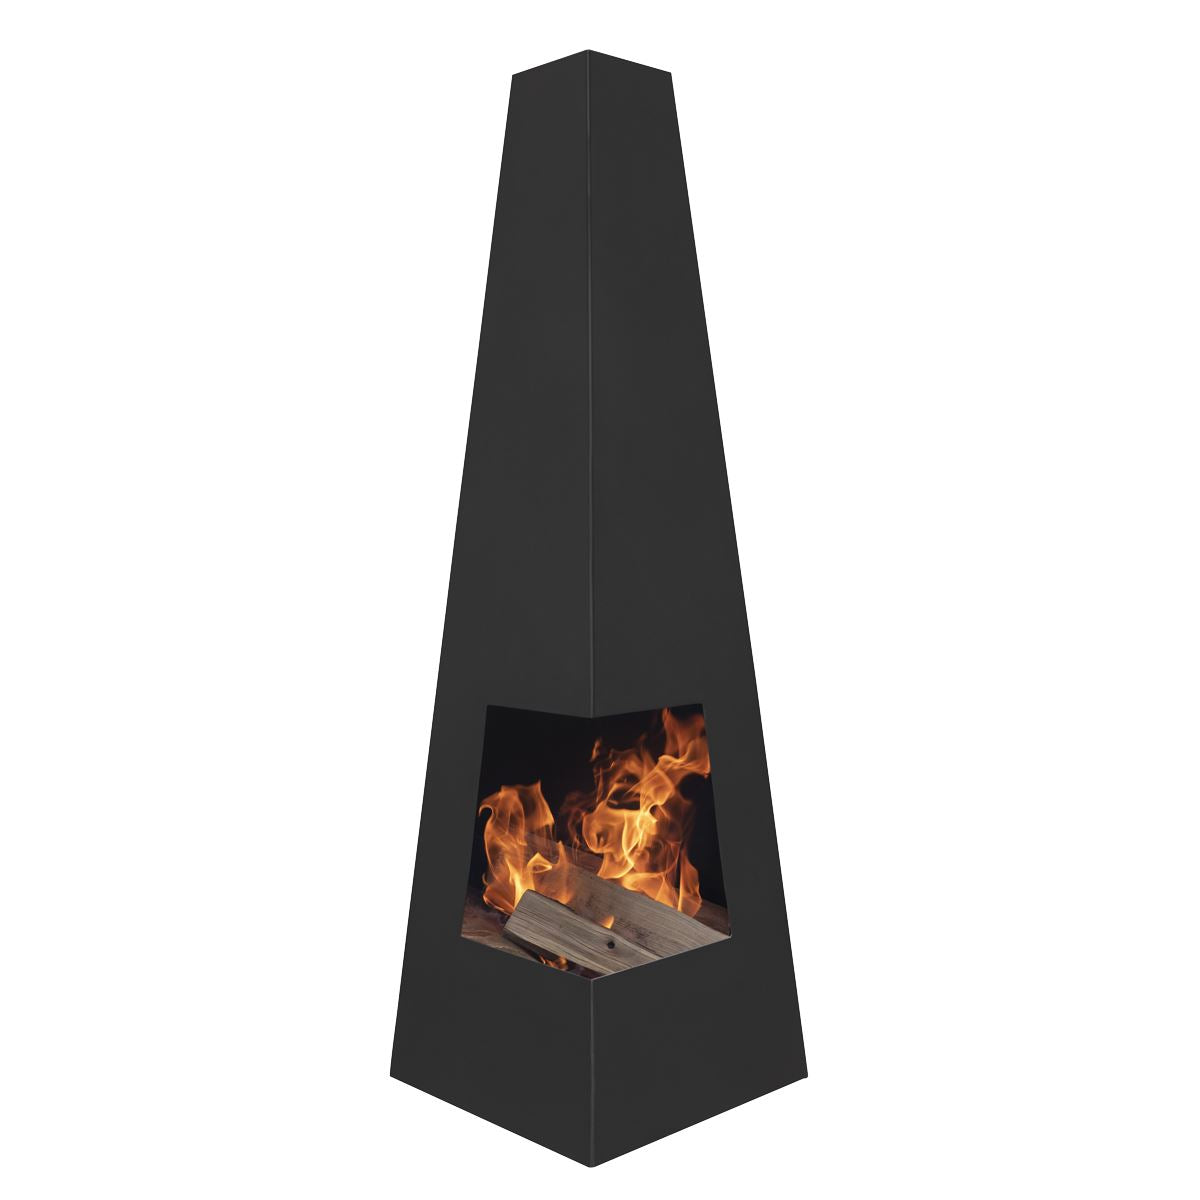 Dellonda Chiminea, Wood Burner, Heater for Outdoors W45cm x H150cm - Black Steel